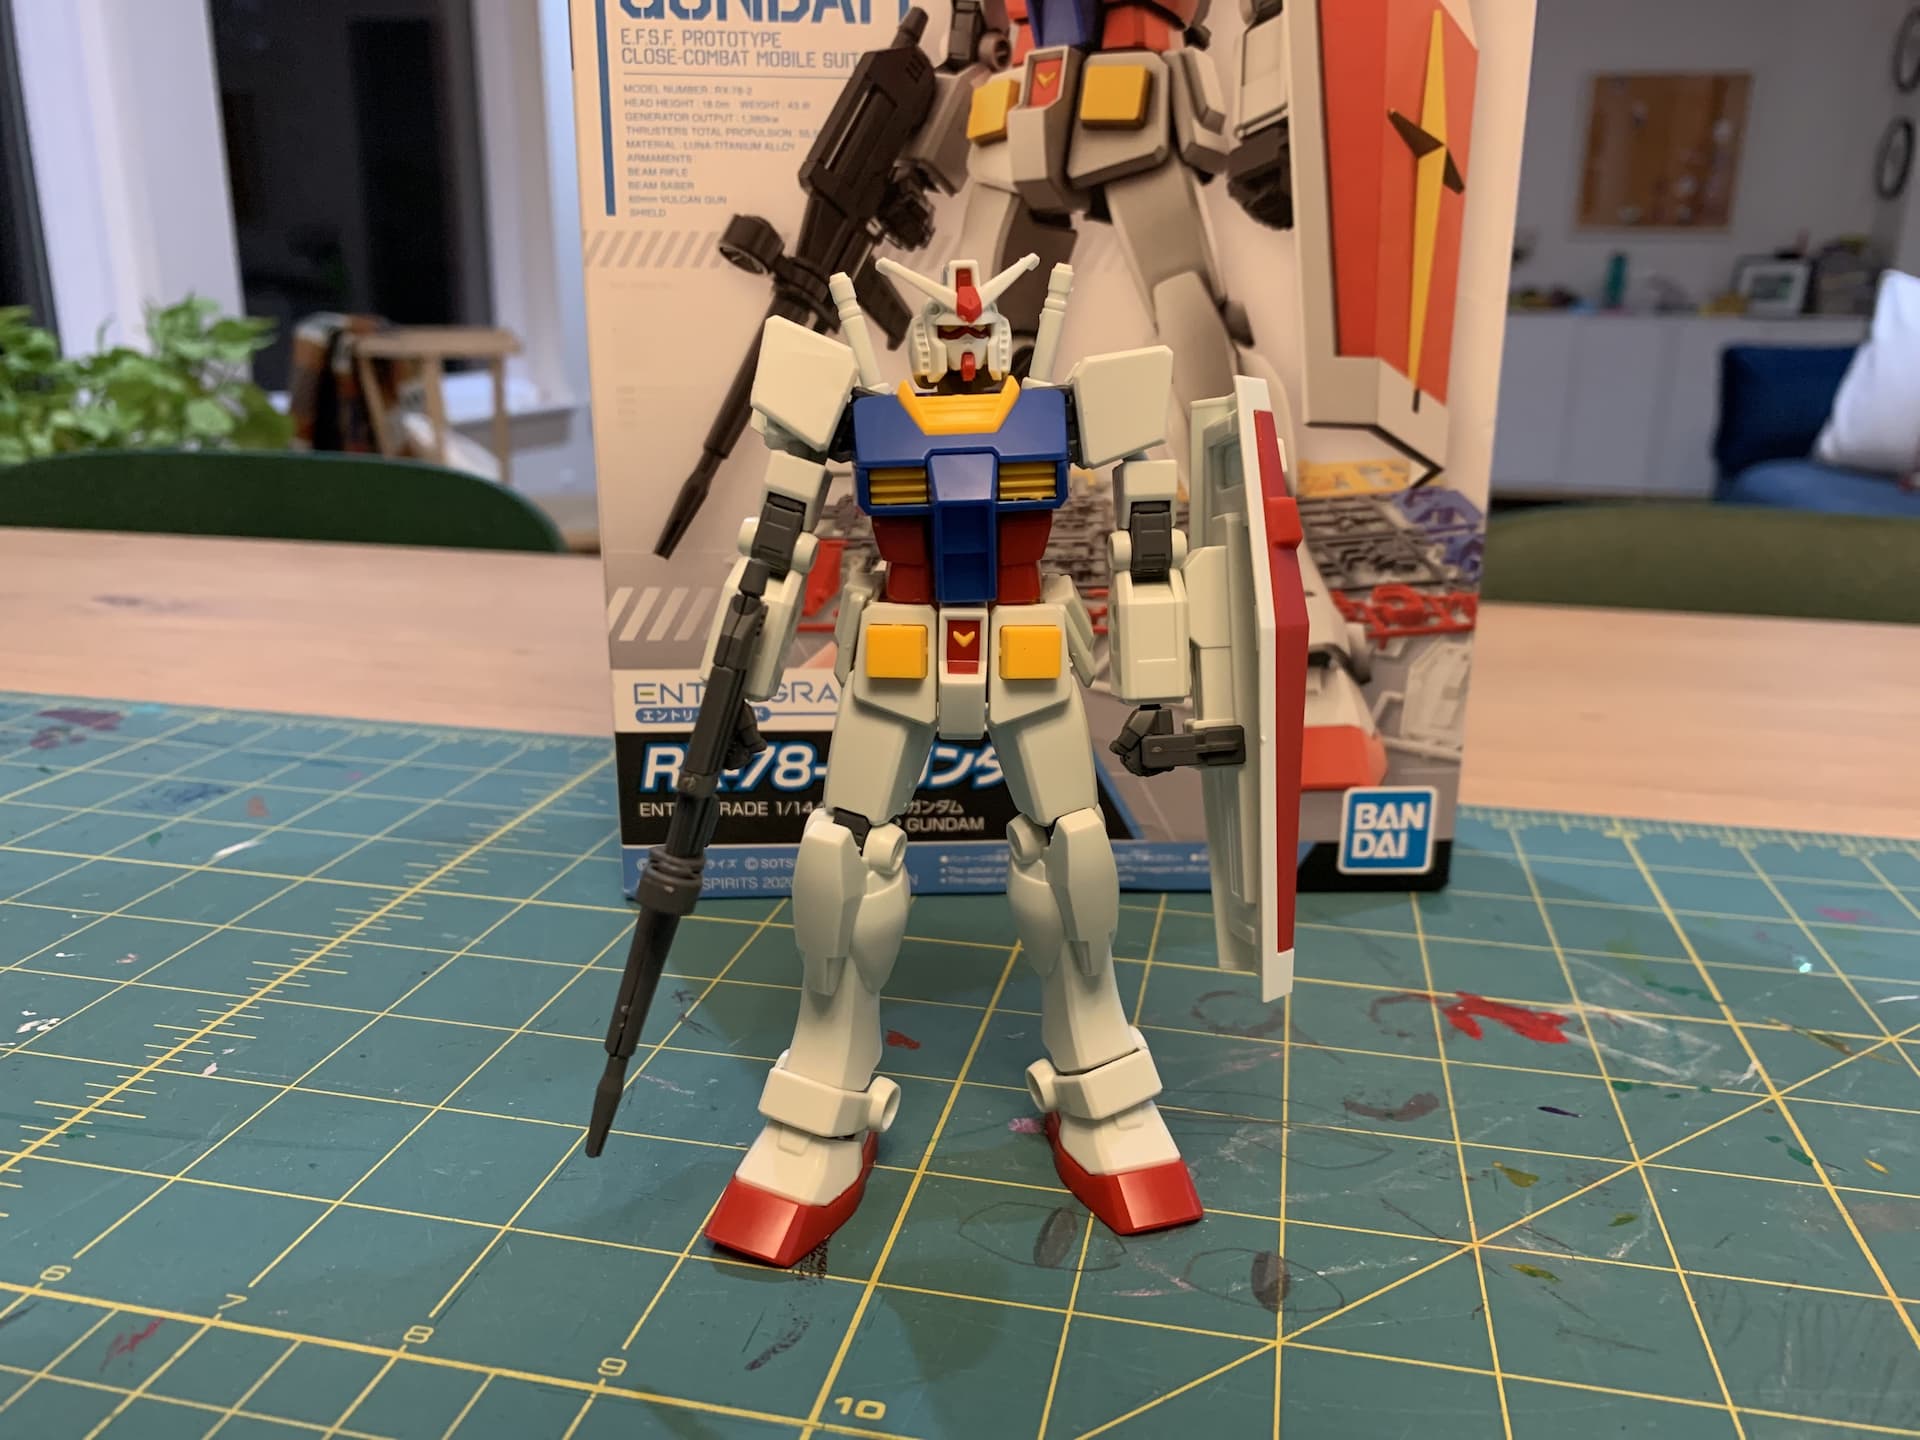 A small plastic model Gundam robot